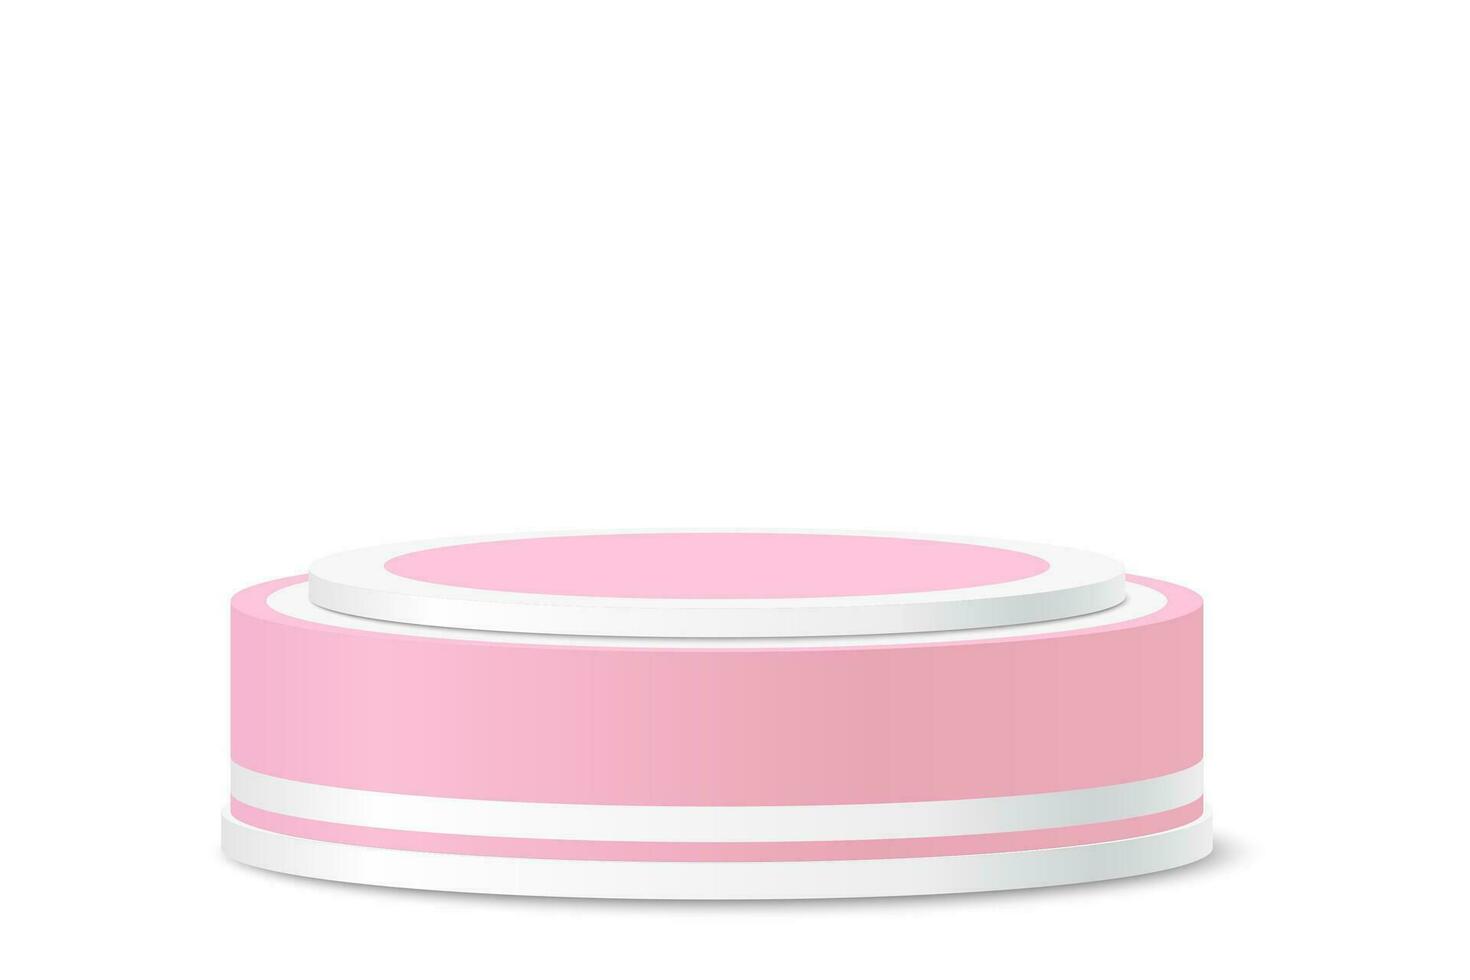 pastel pink podium product presentation vector